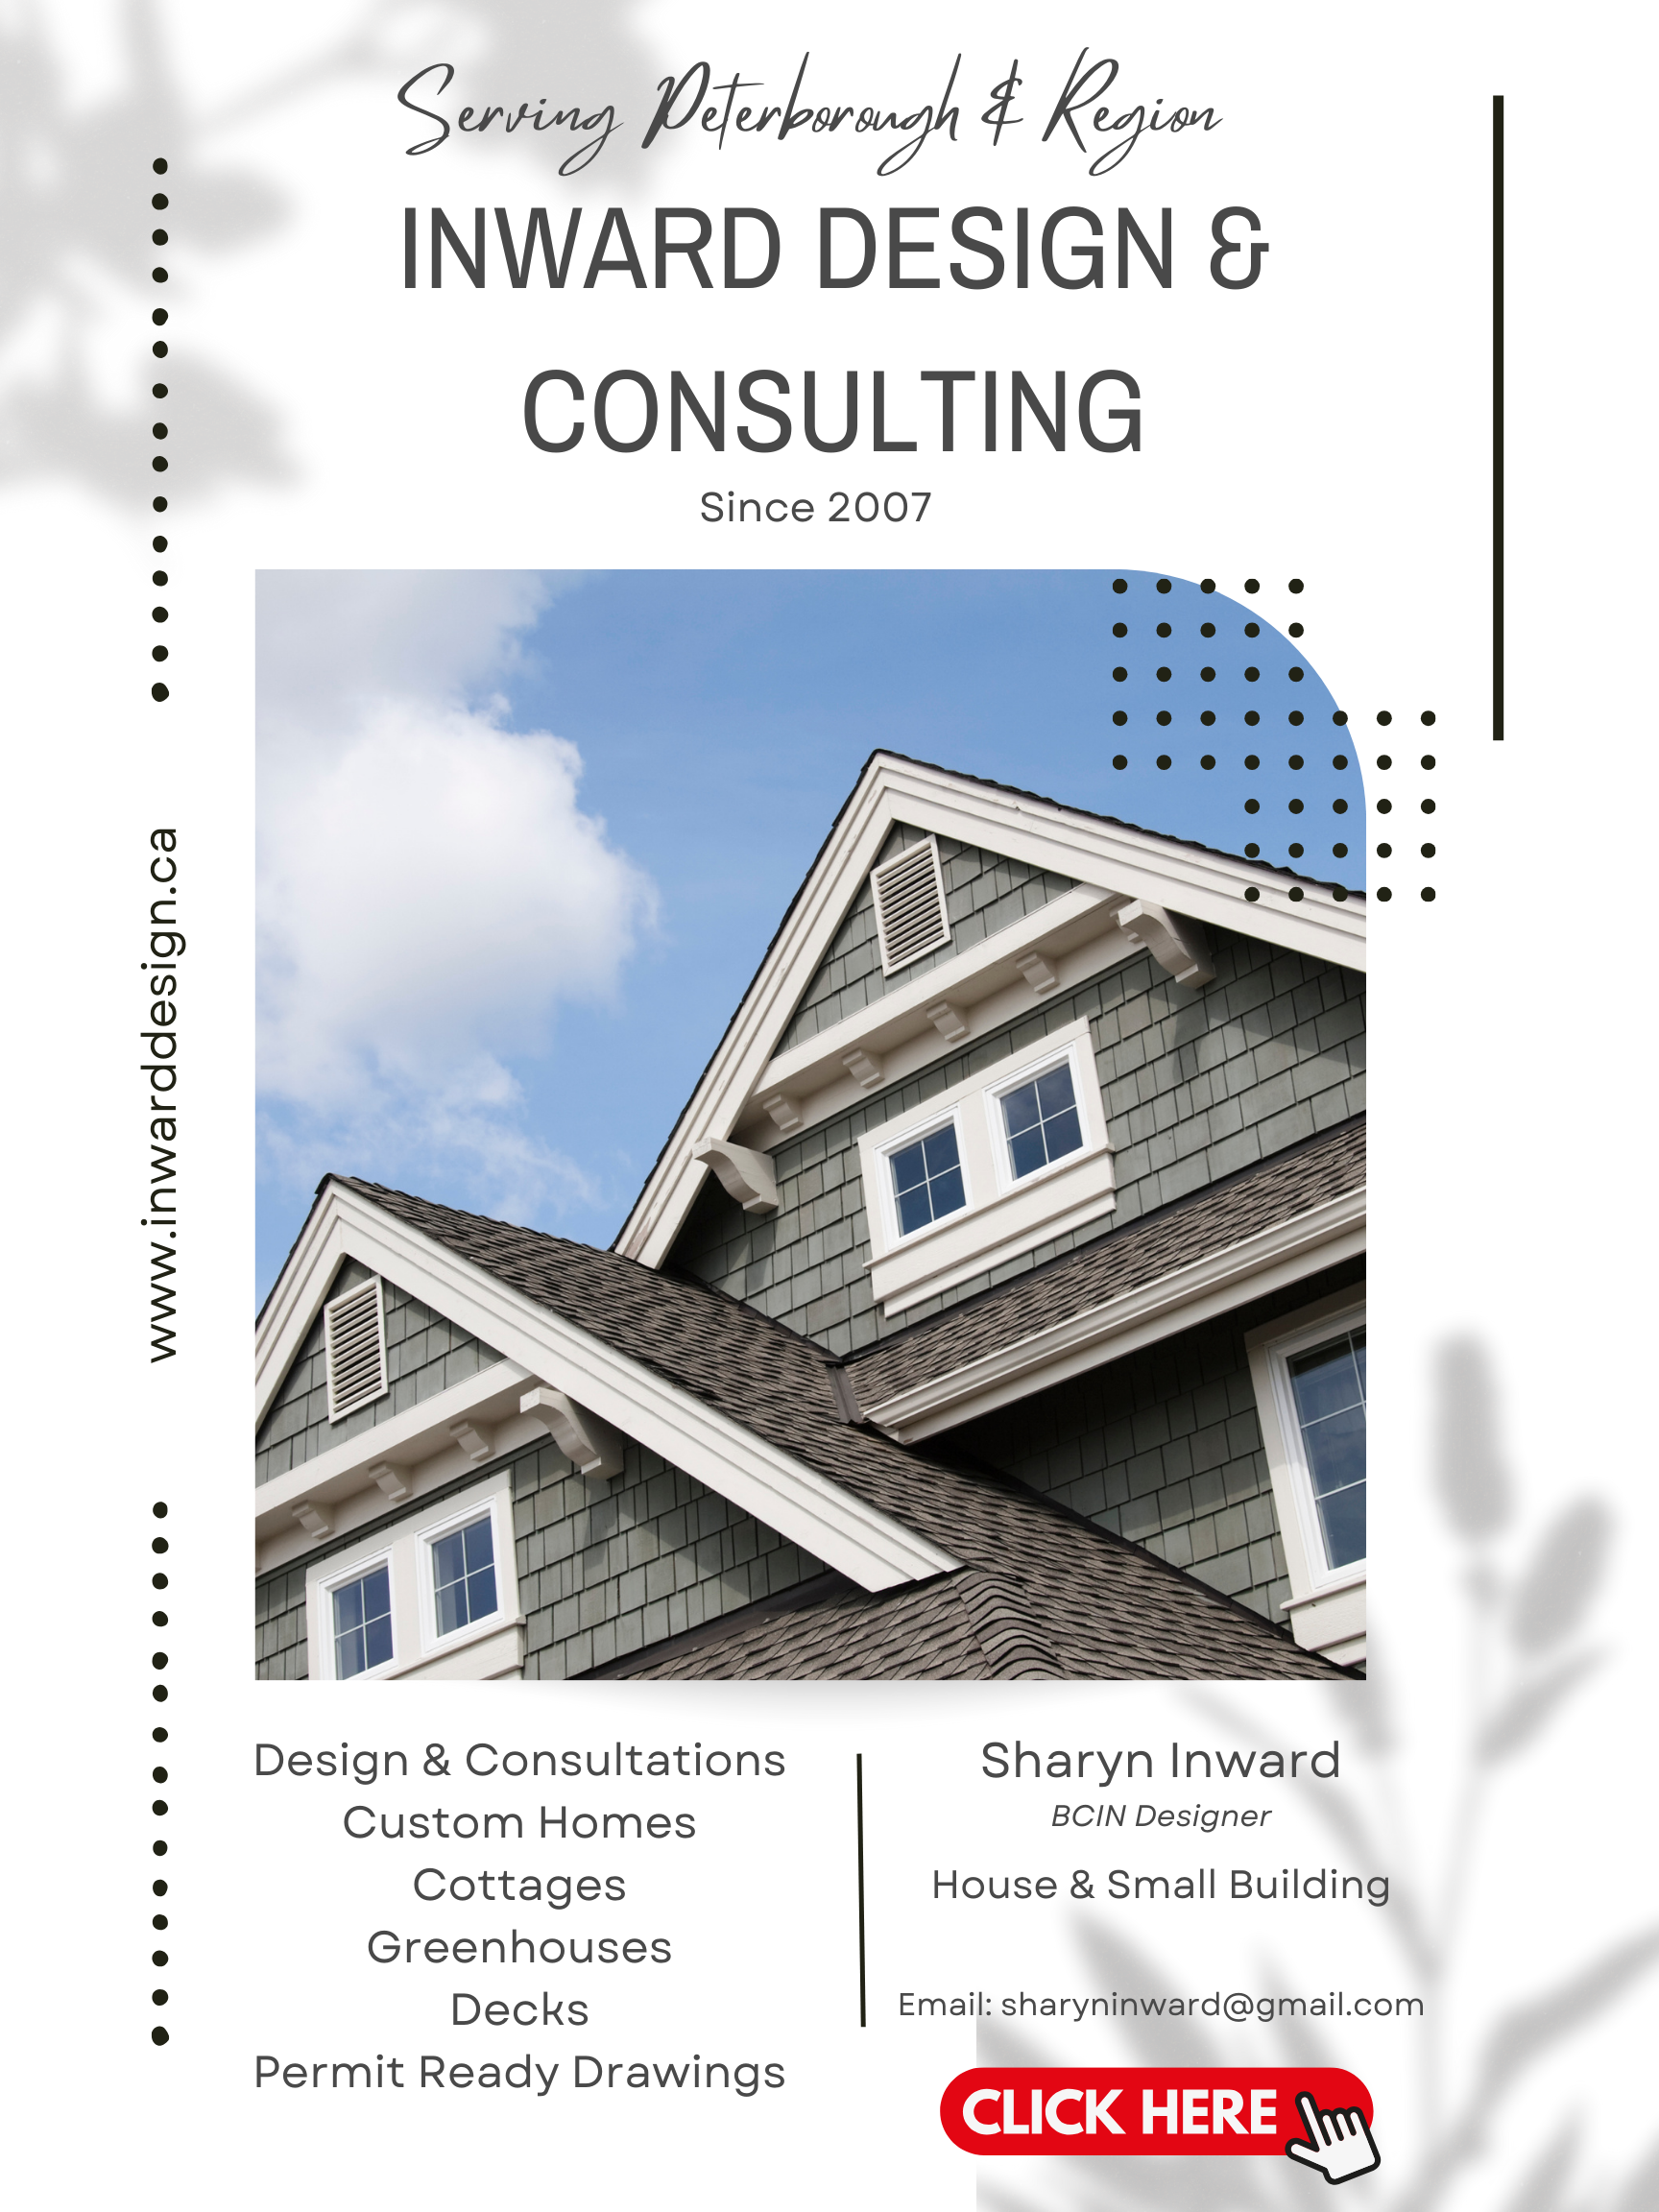 Inward Design & Consulting